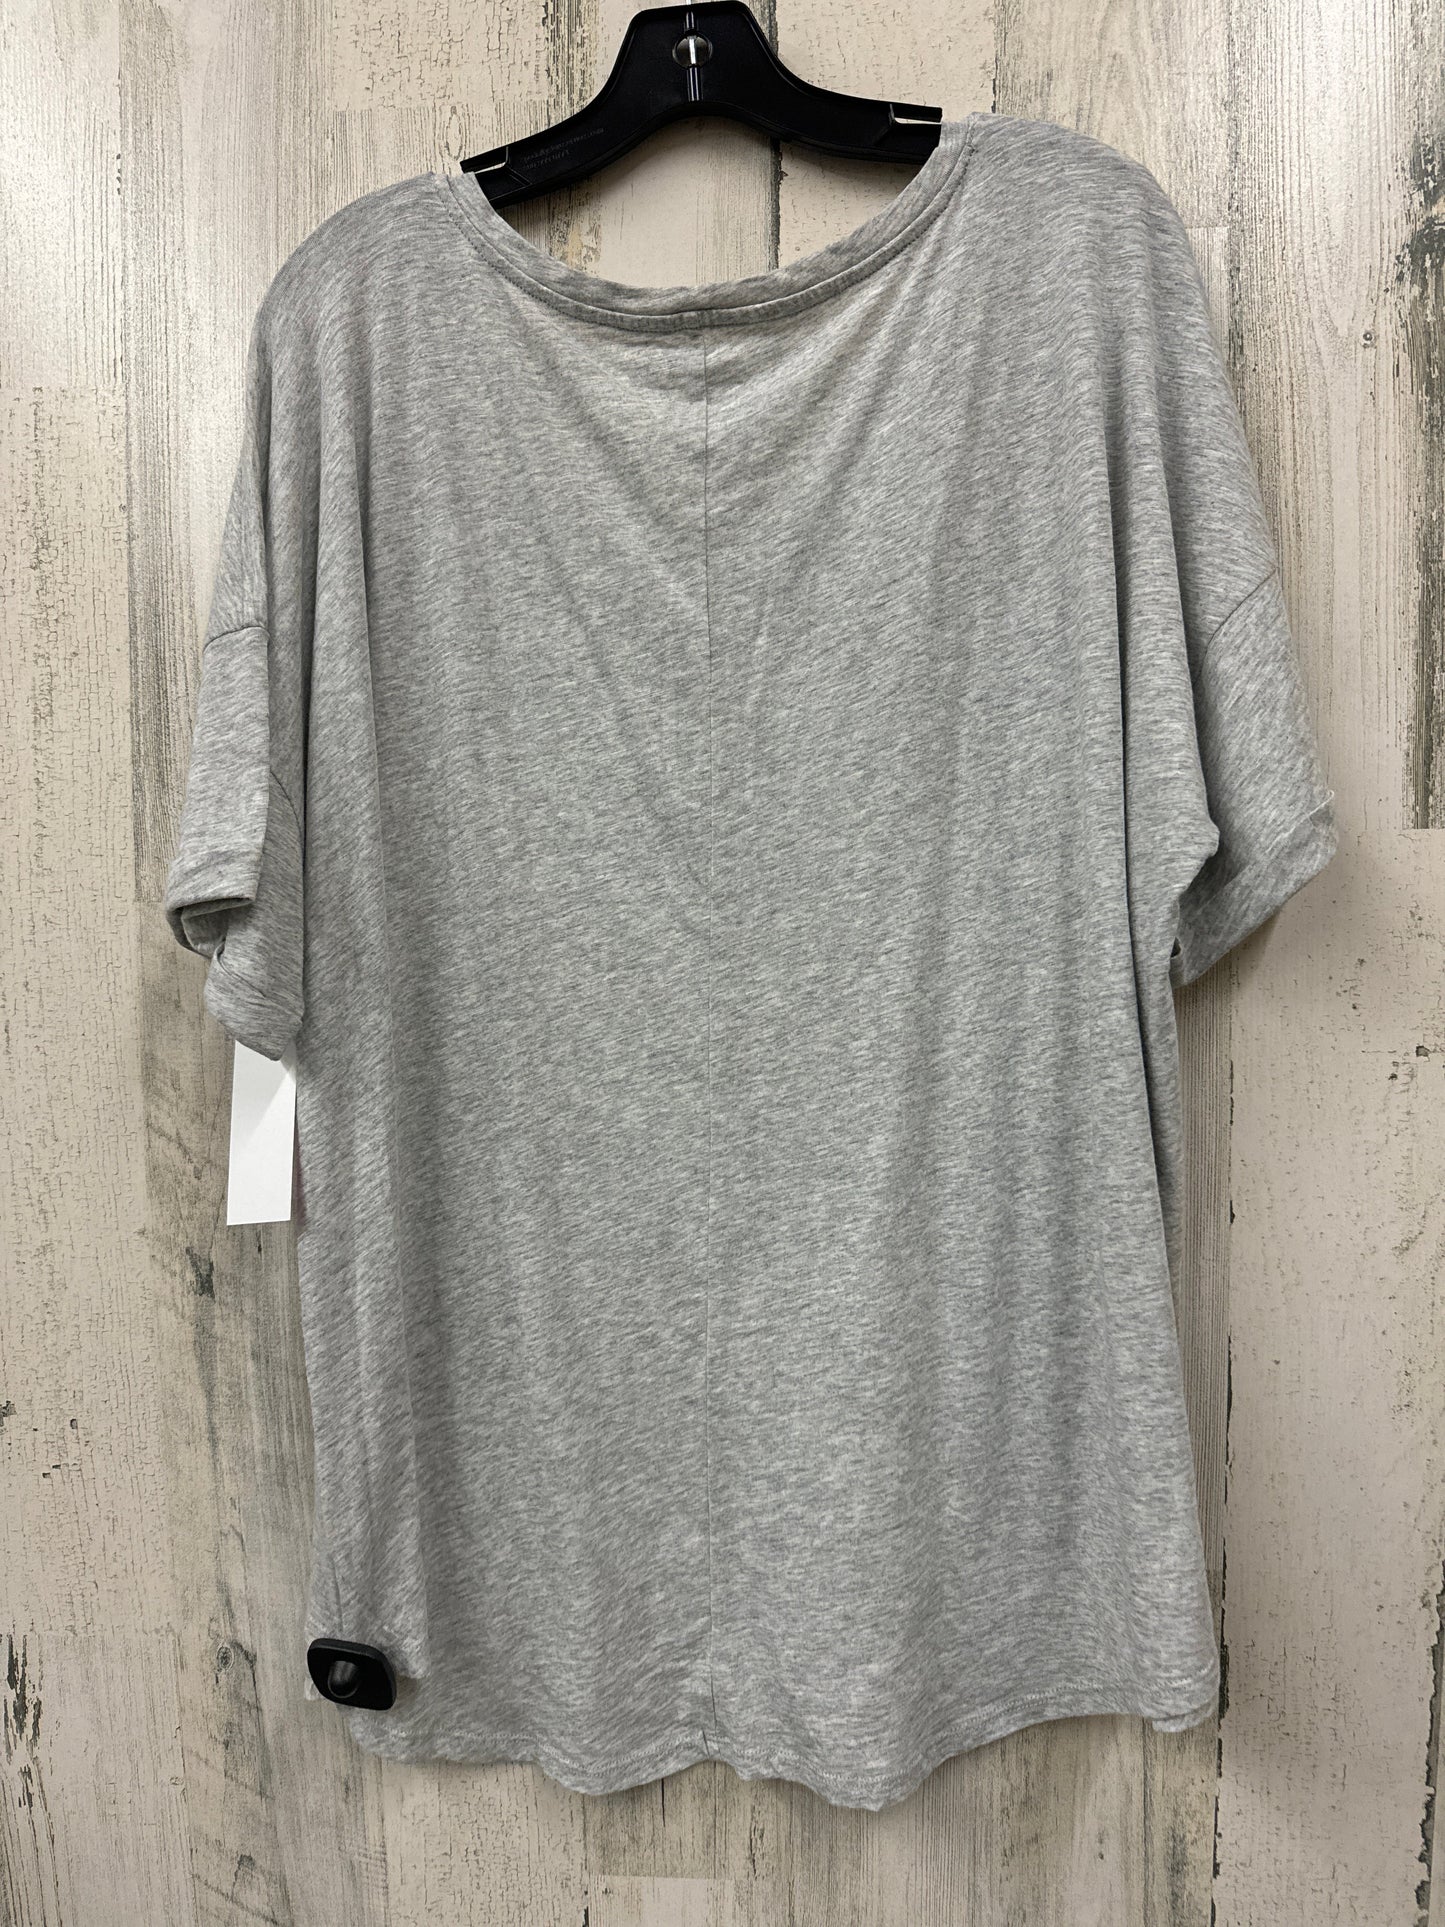 Grey Top Short Sleeve Basic Cmf, Size 2x